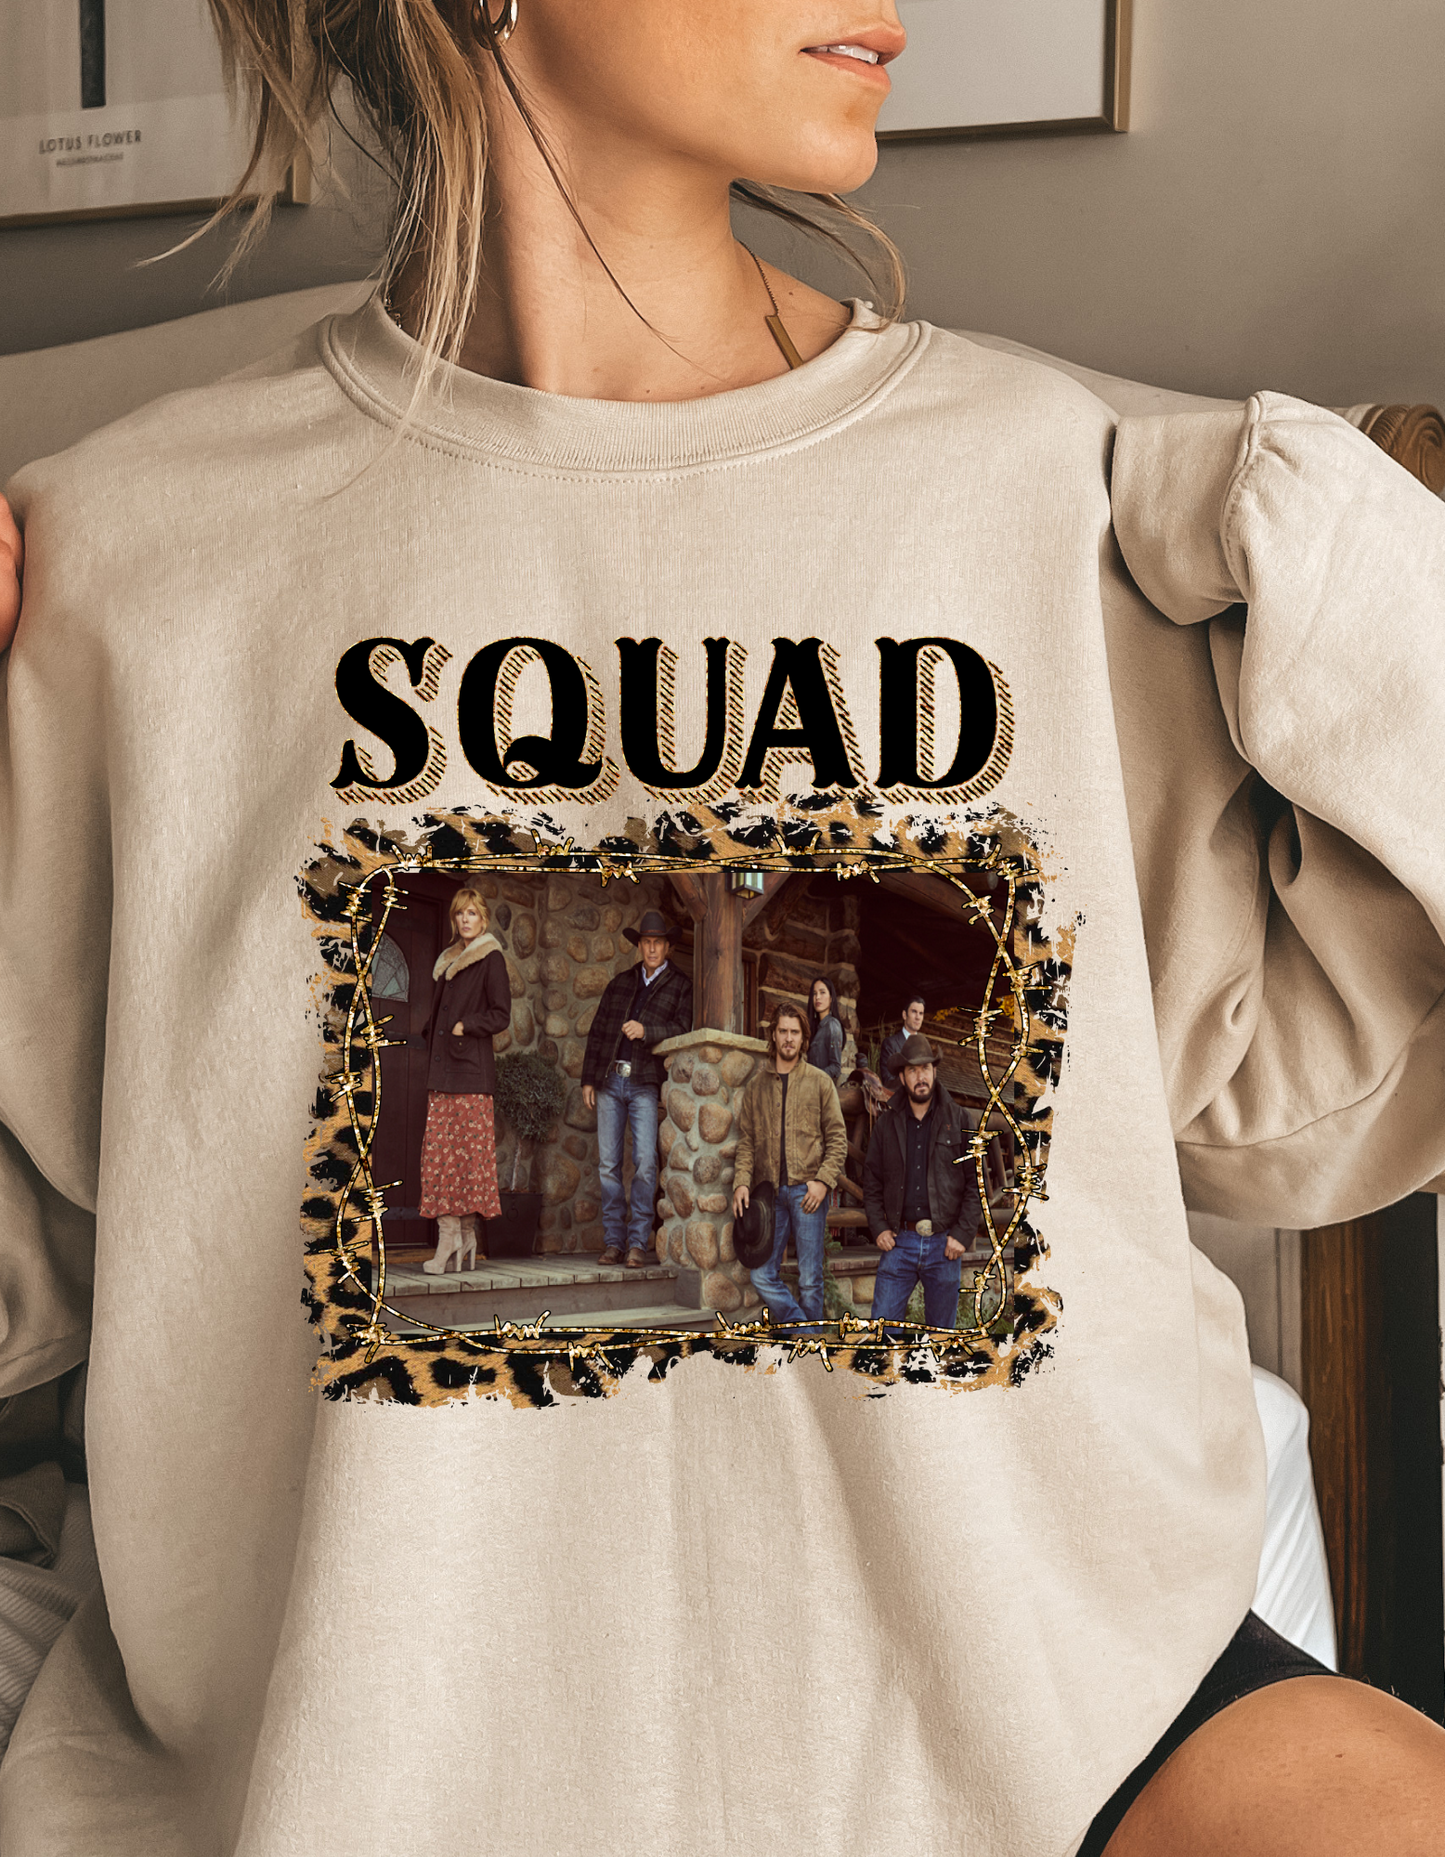 Squad Goals Crew Sweatshirt